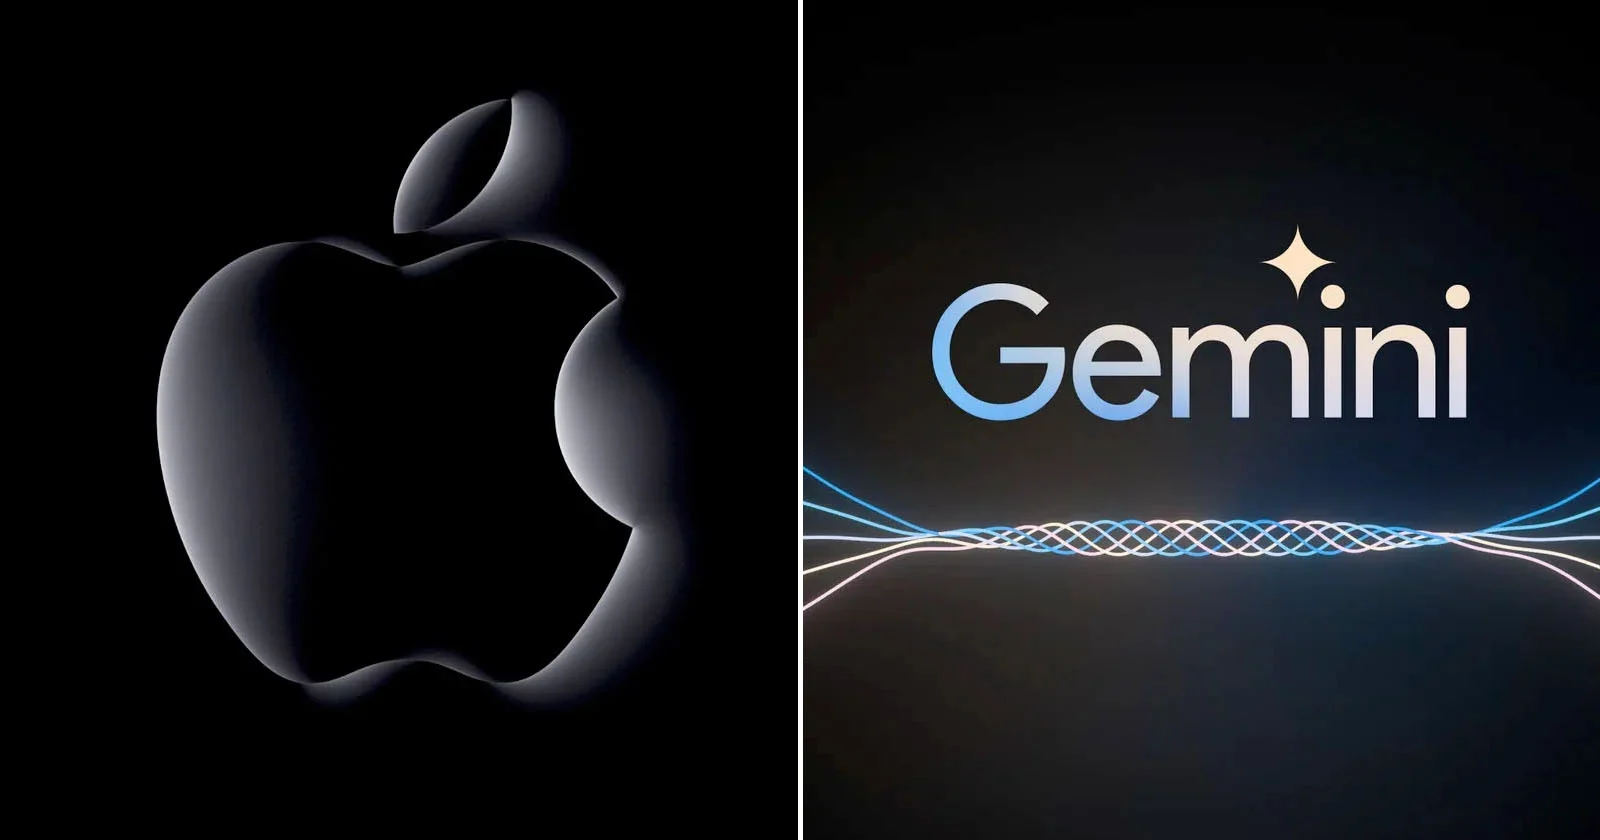 Apple + Google’s Gemini